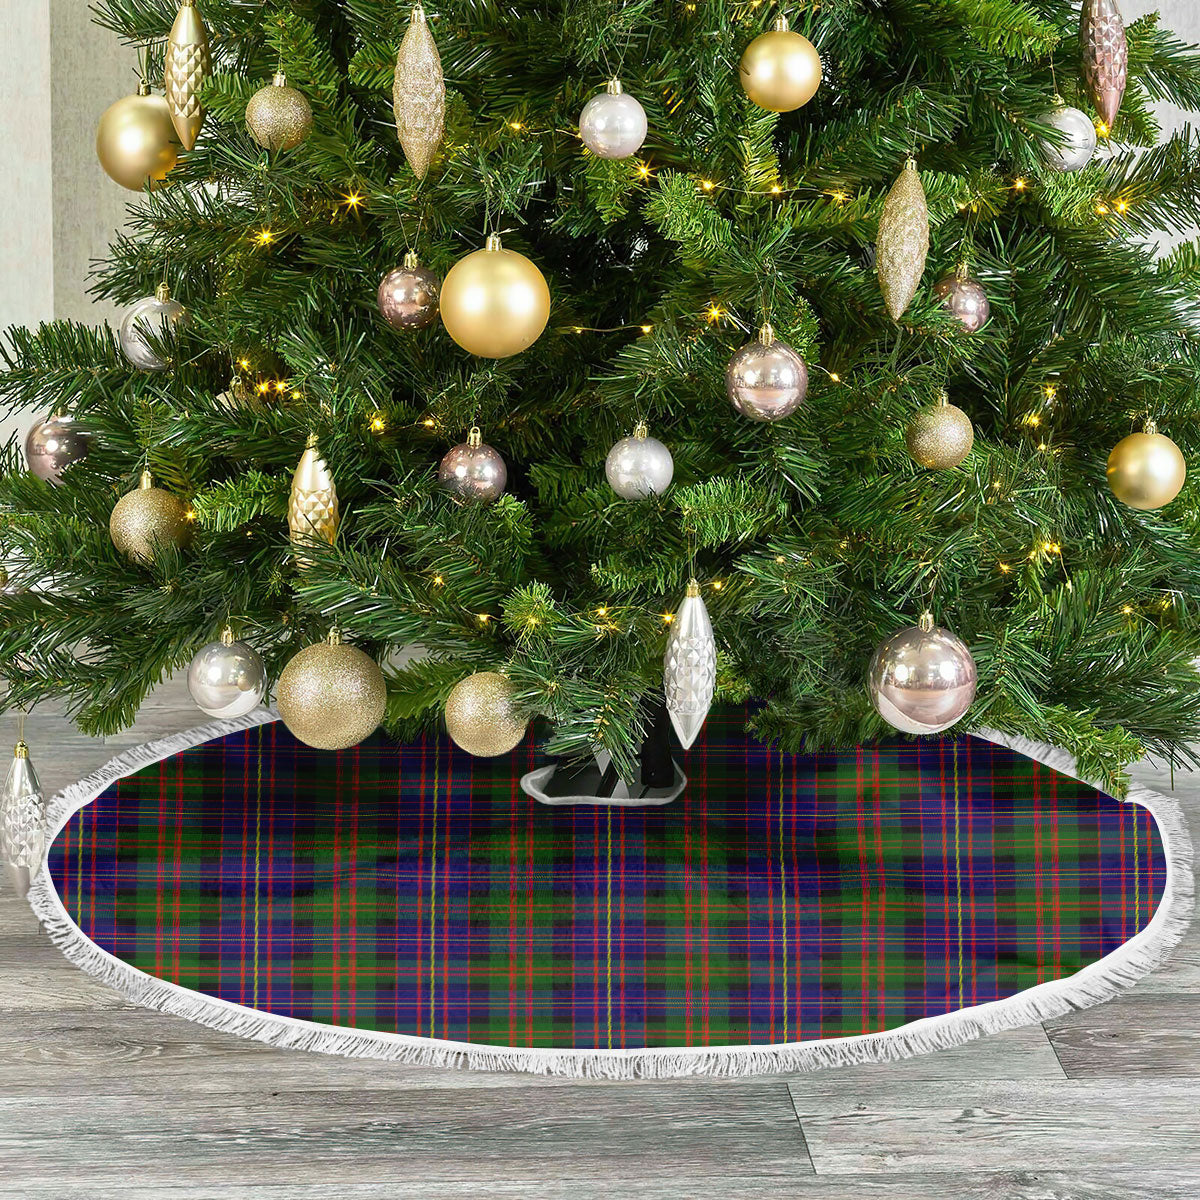 Chalmers Tartan Christmas Tree Skirt